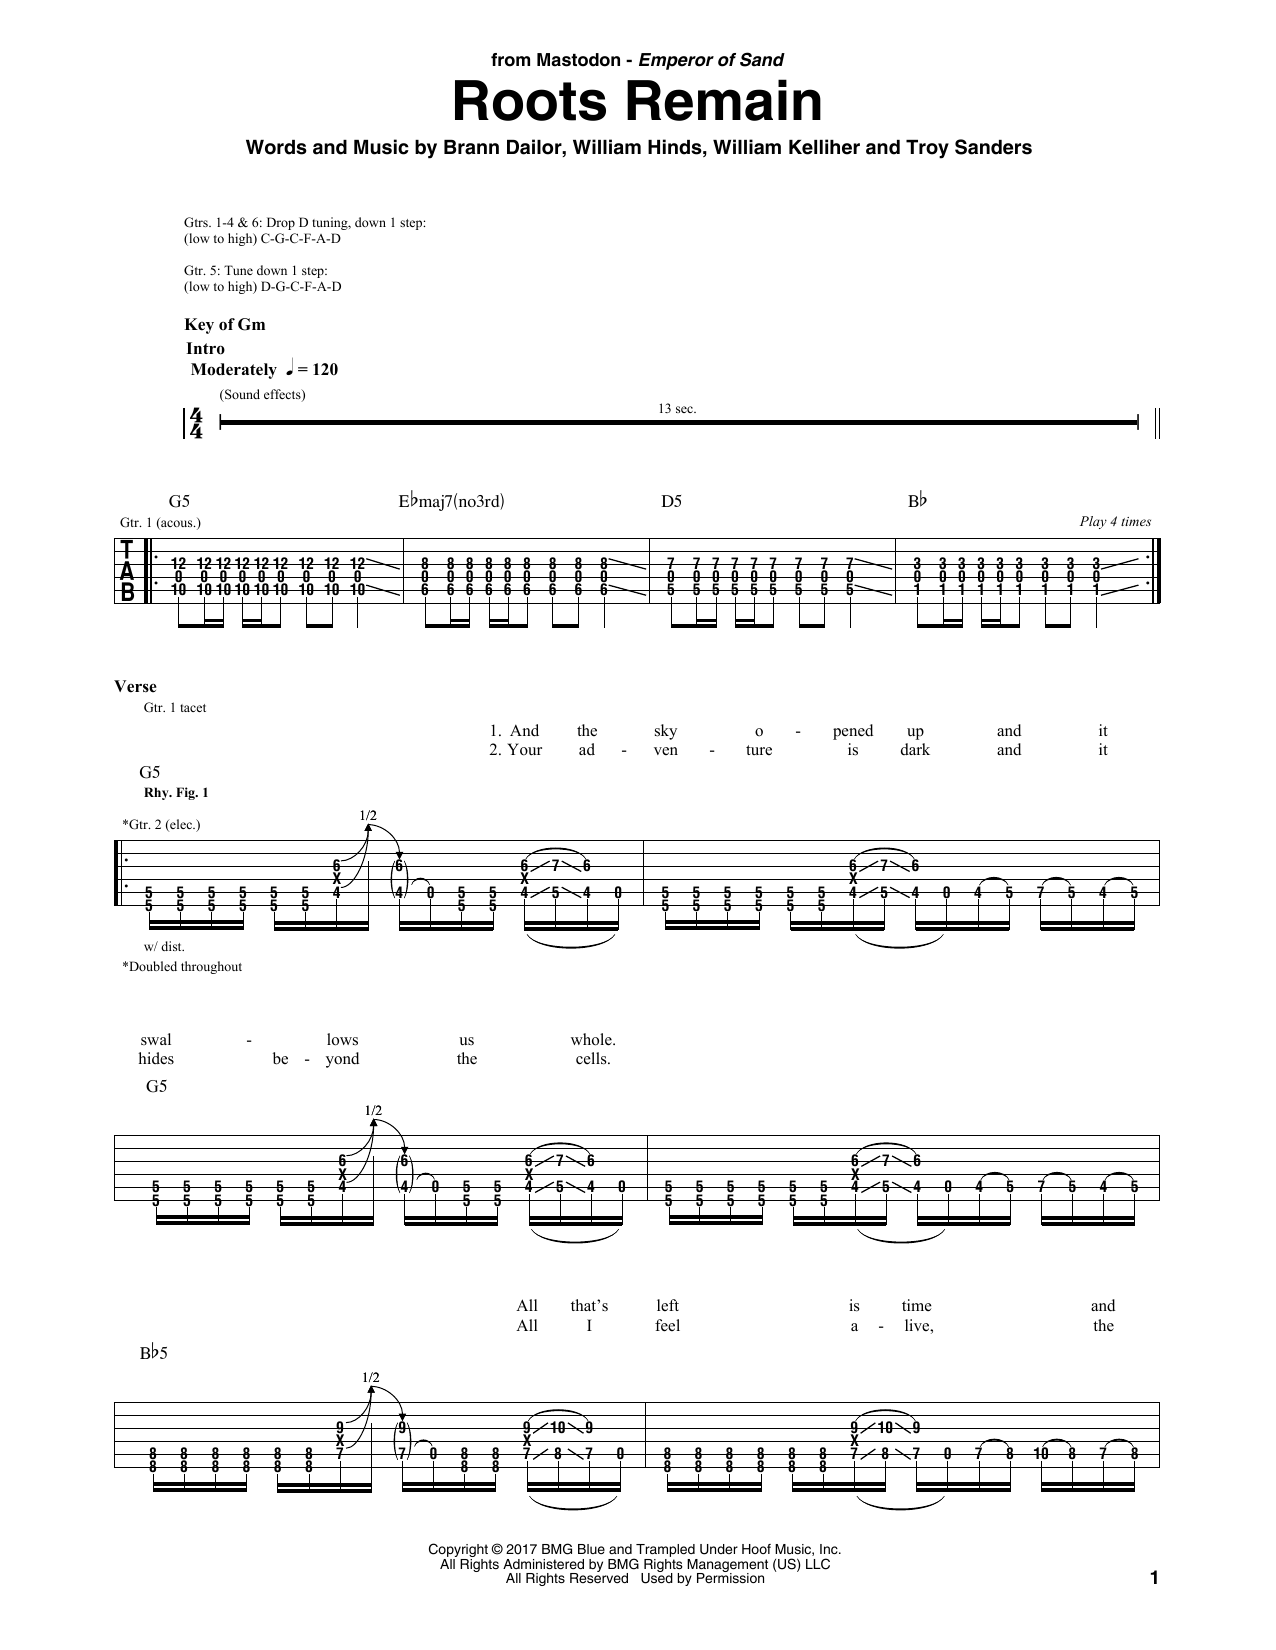 Mastodon Roots Remain Sheet Music Notes & Chords for Guitar Tab - Download or Print PDF